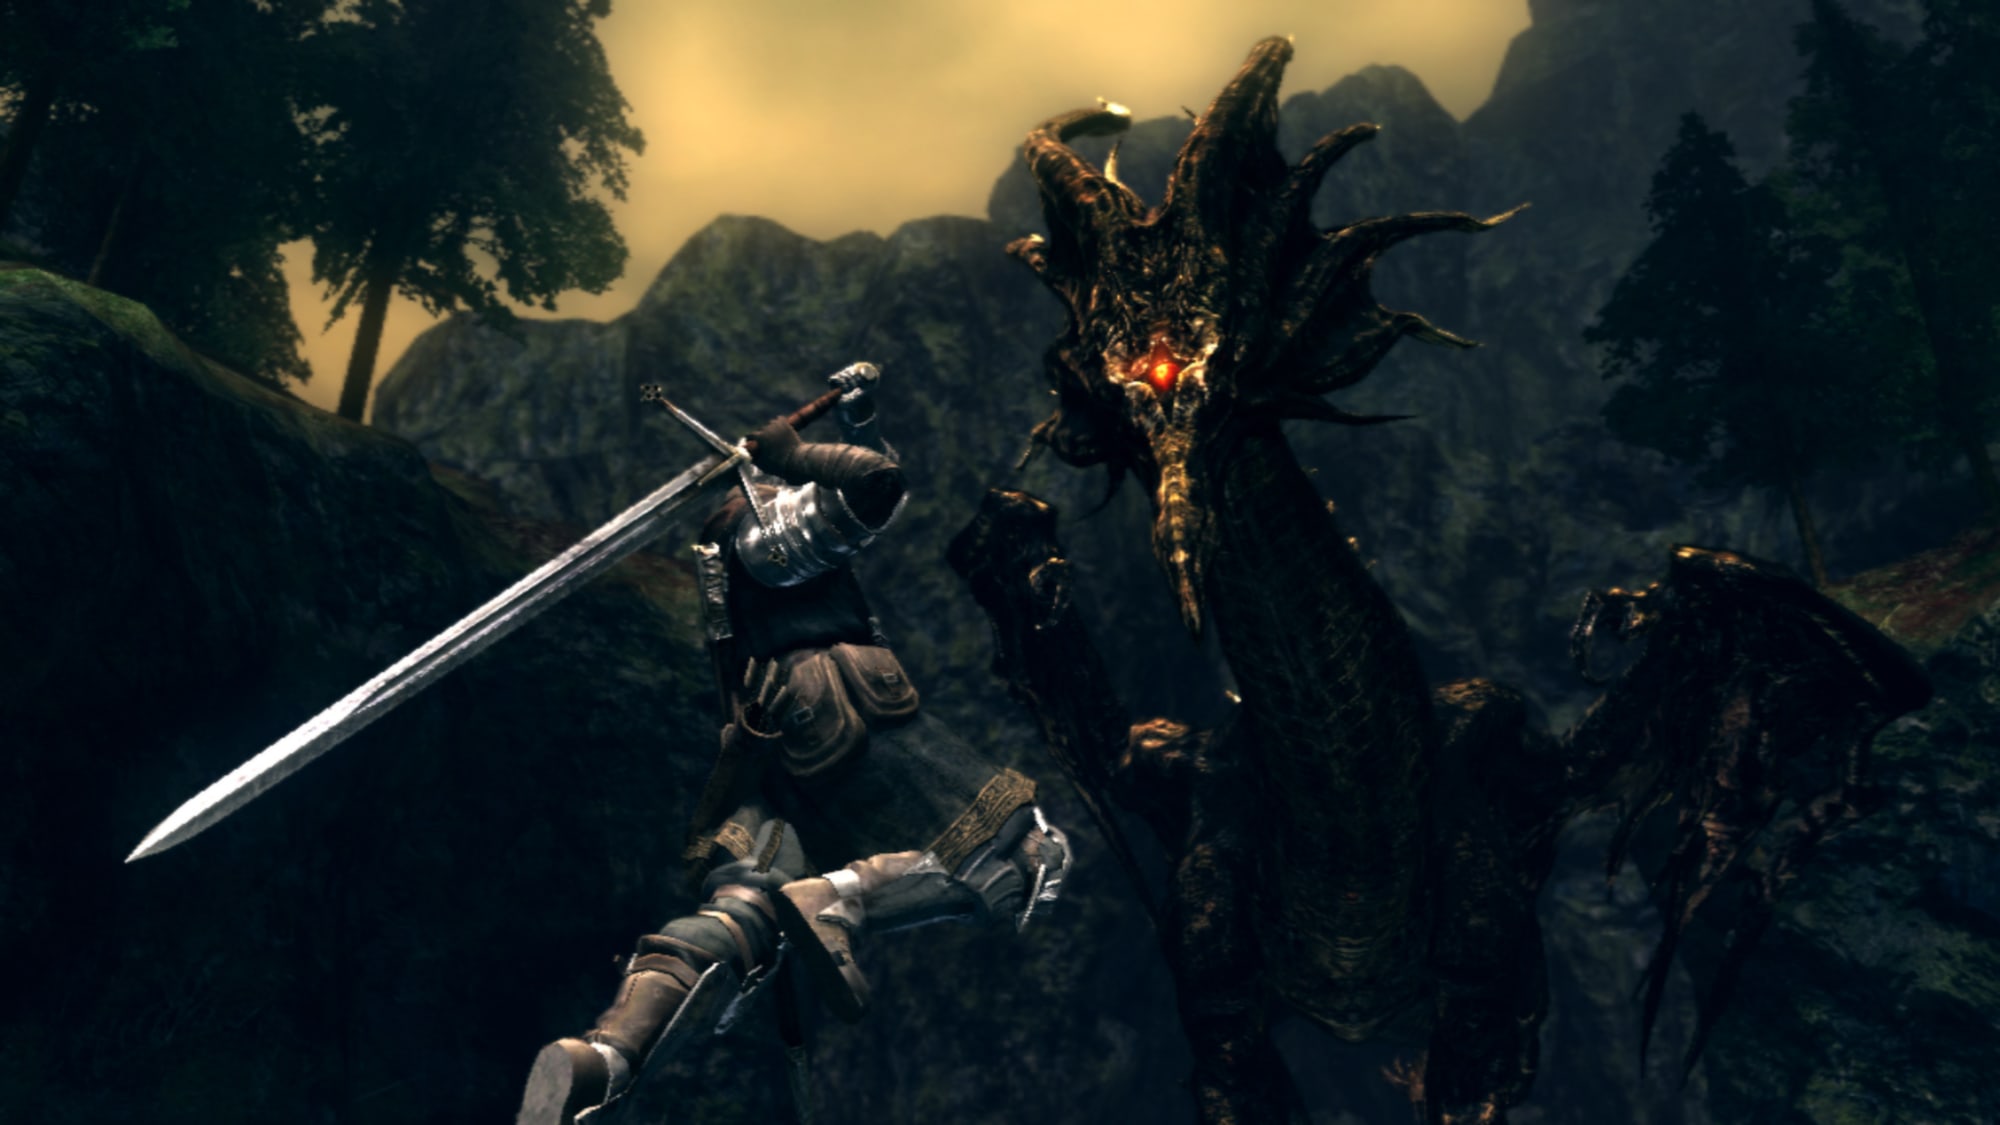 Dark Souls Still One of the Best Games Ever - TheGamersRoom